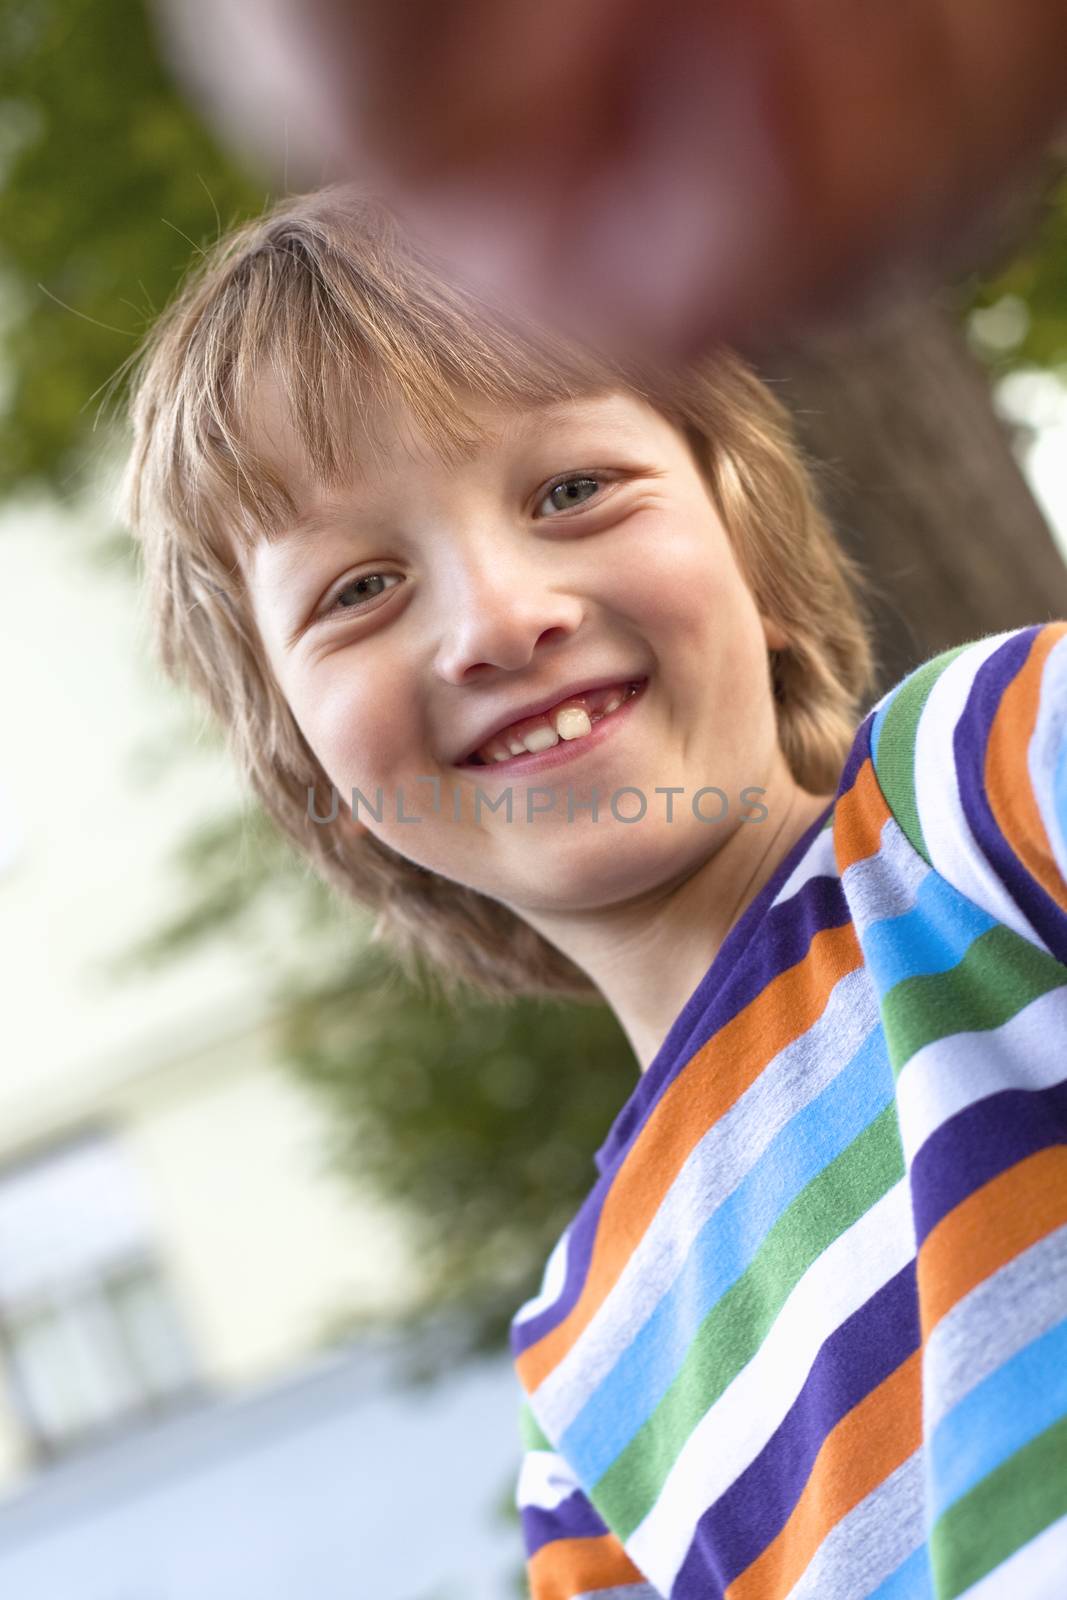 Portrait of a Happy Boy Outdoors